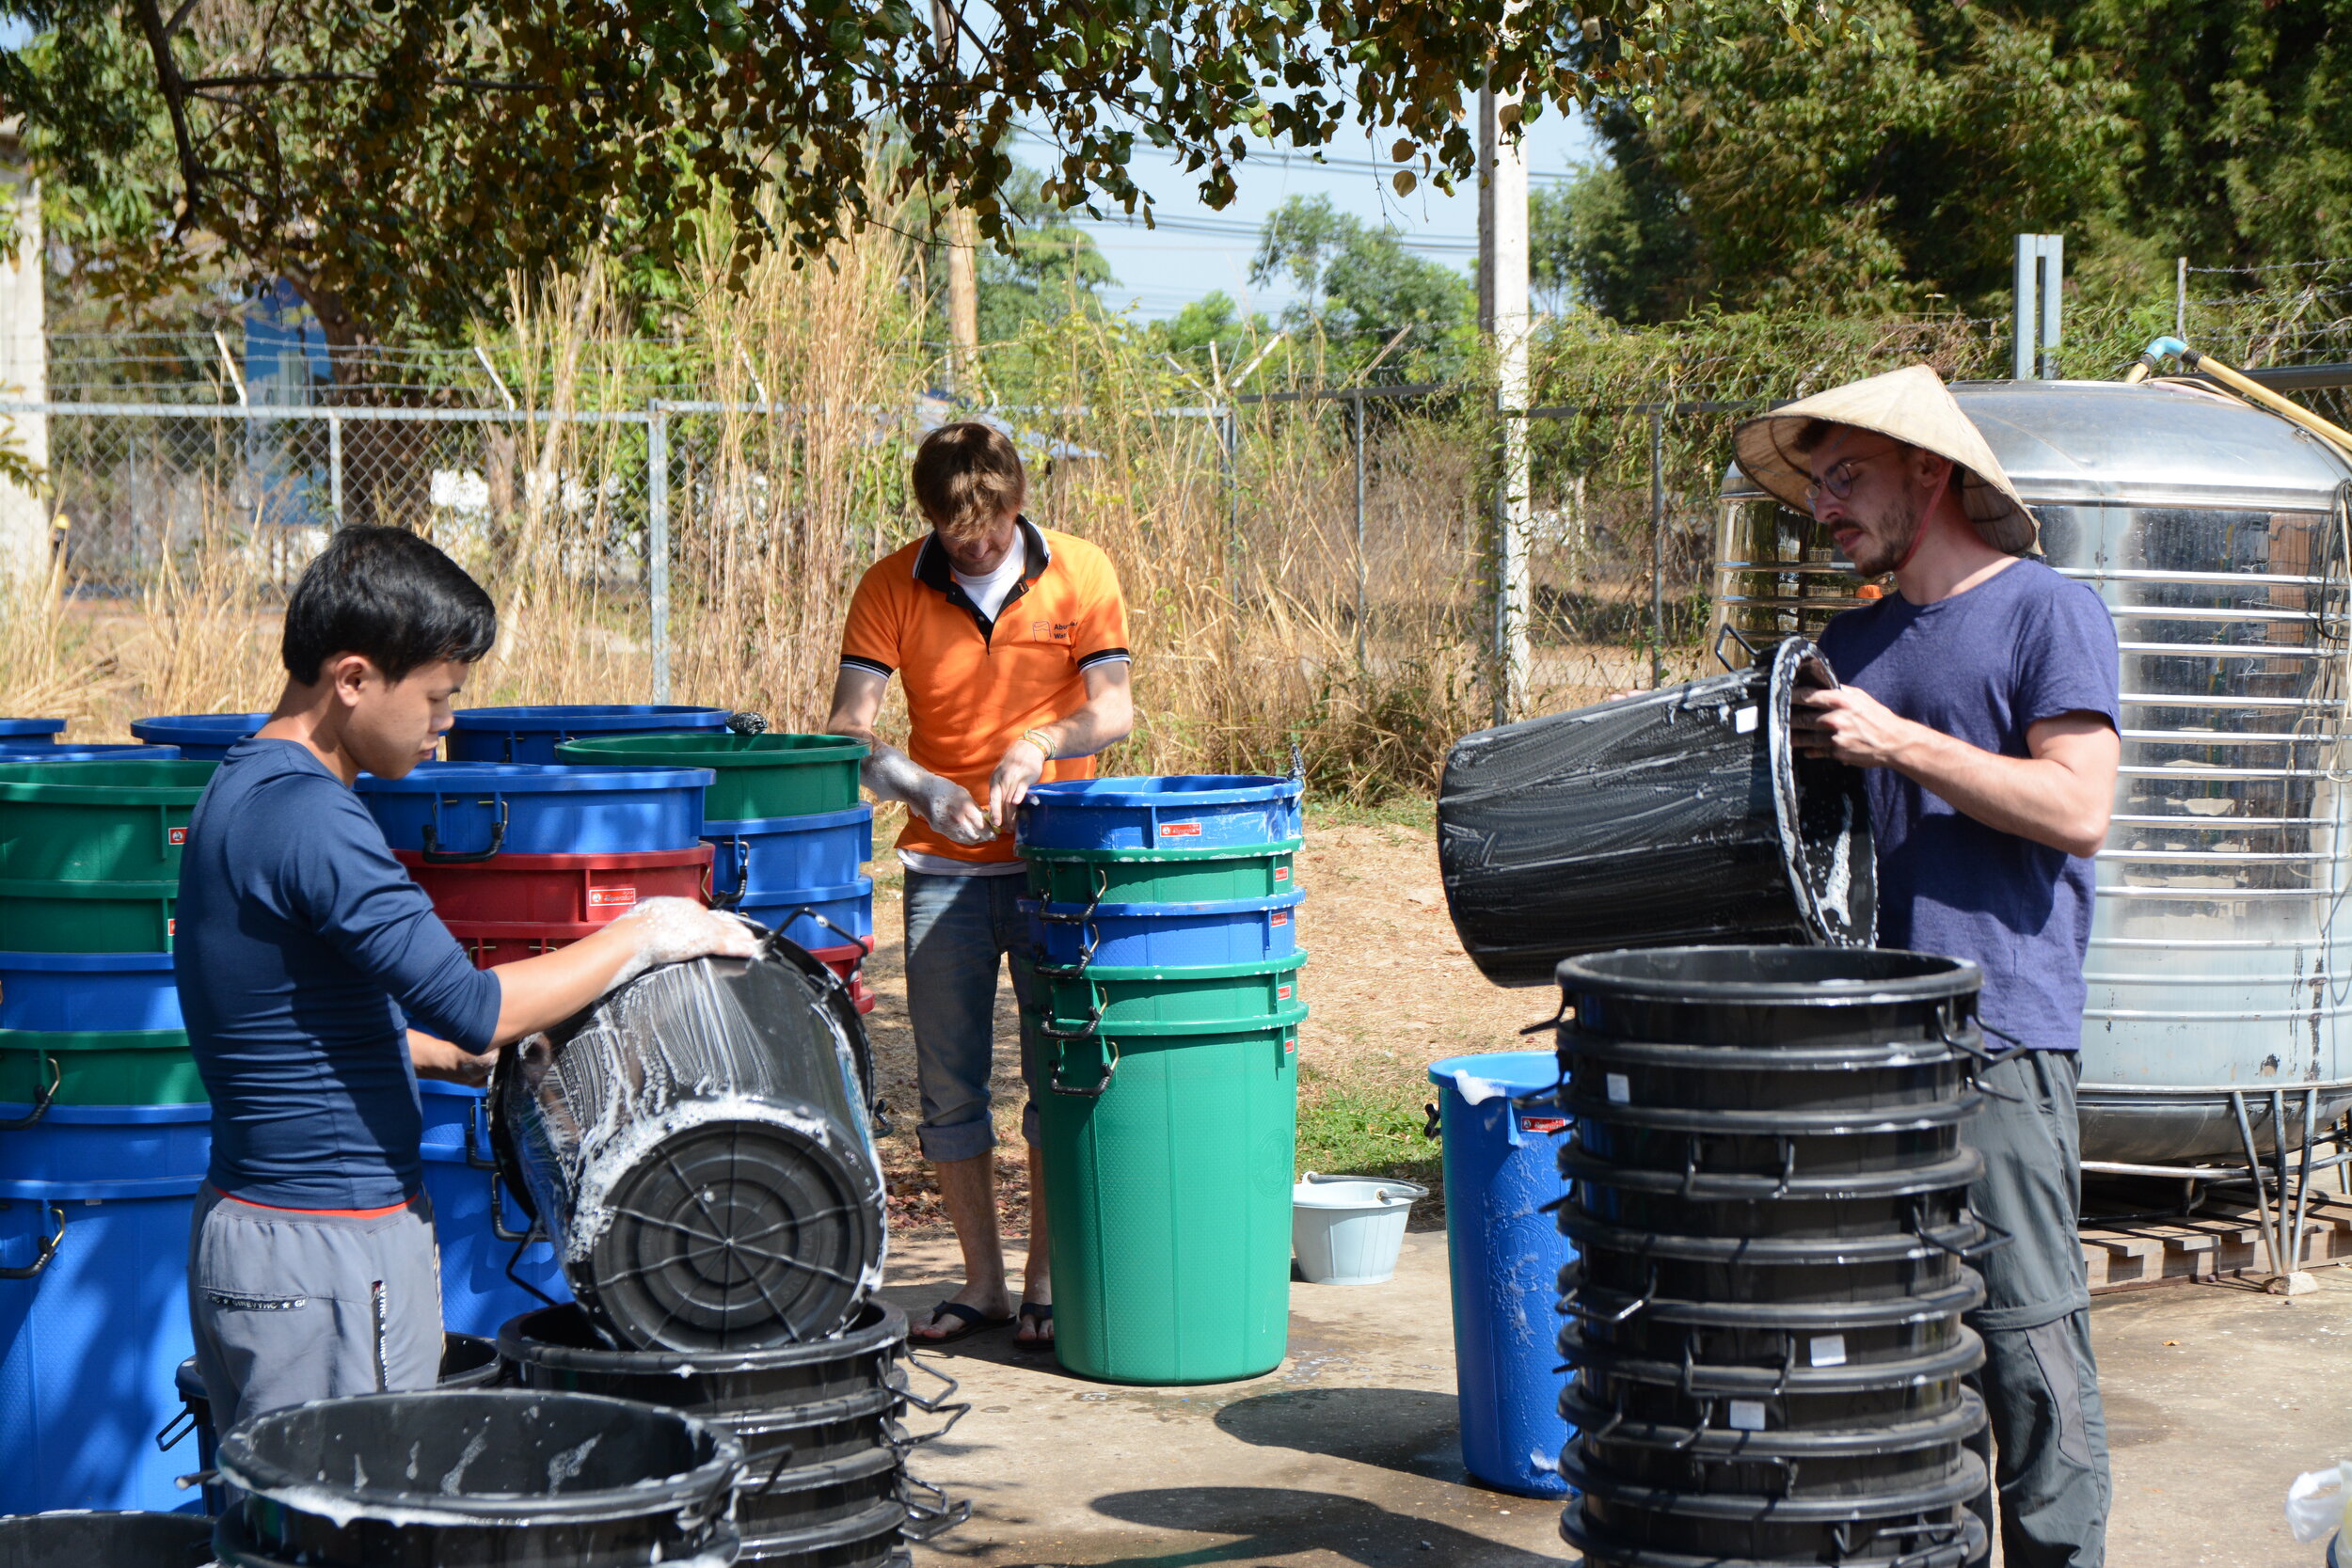   Kamkheo, Keith and Florian washing the buckets  